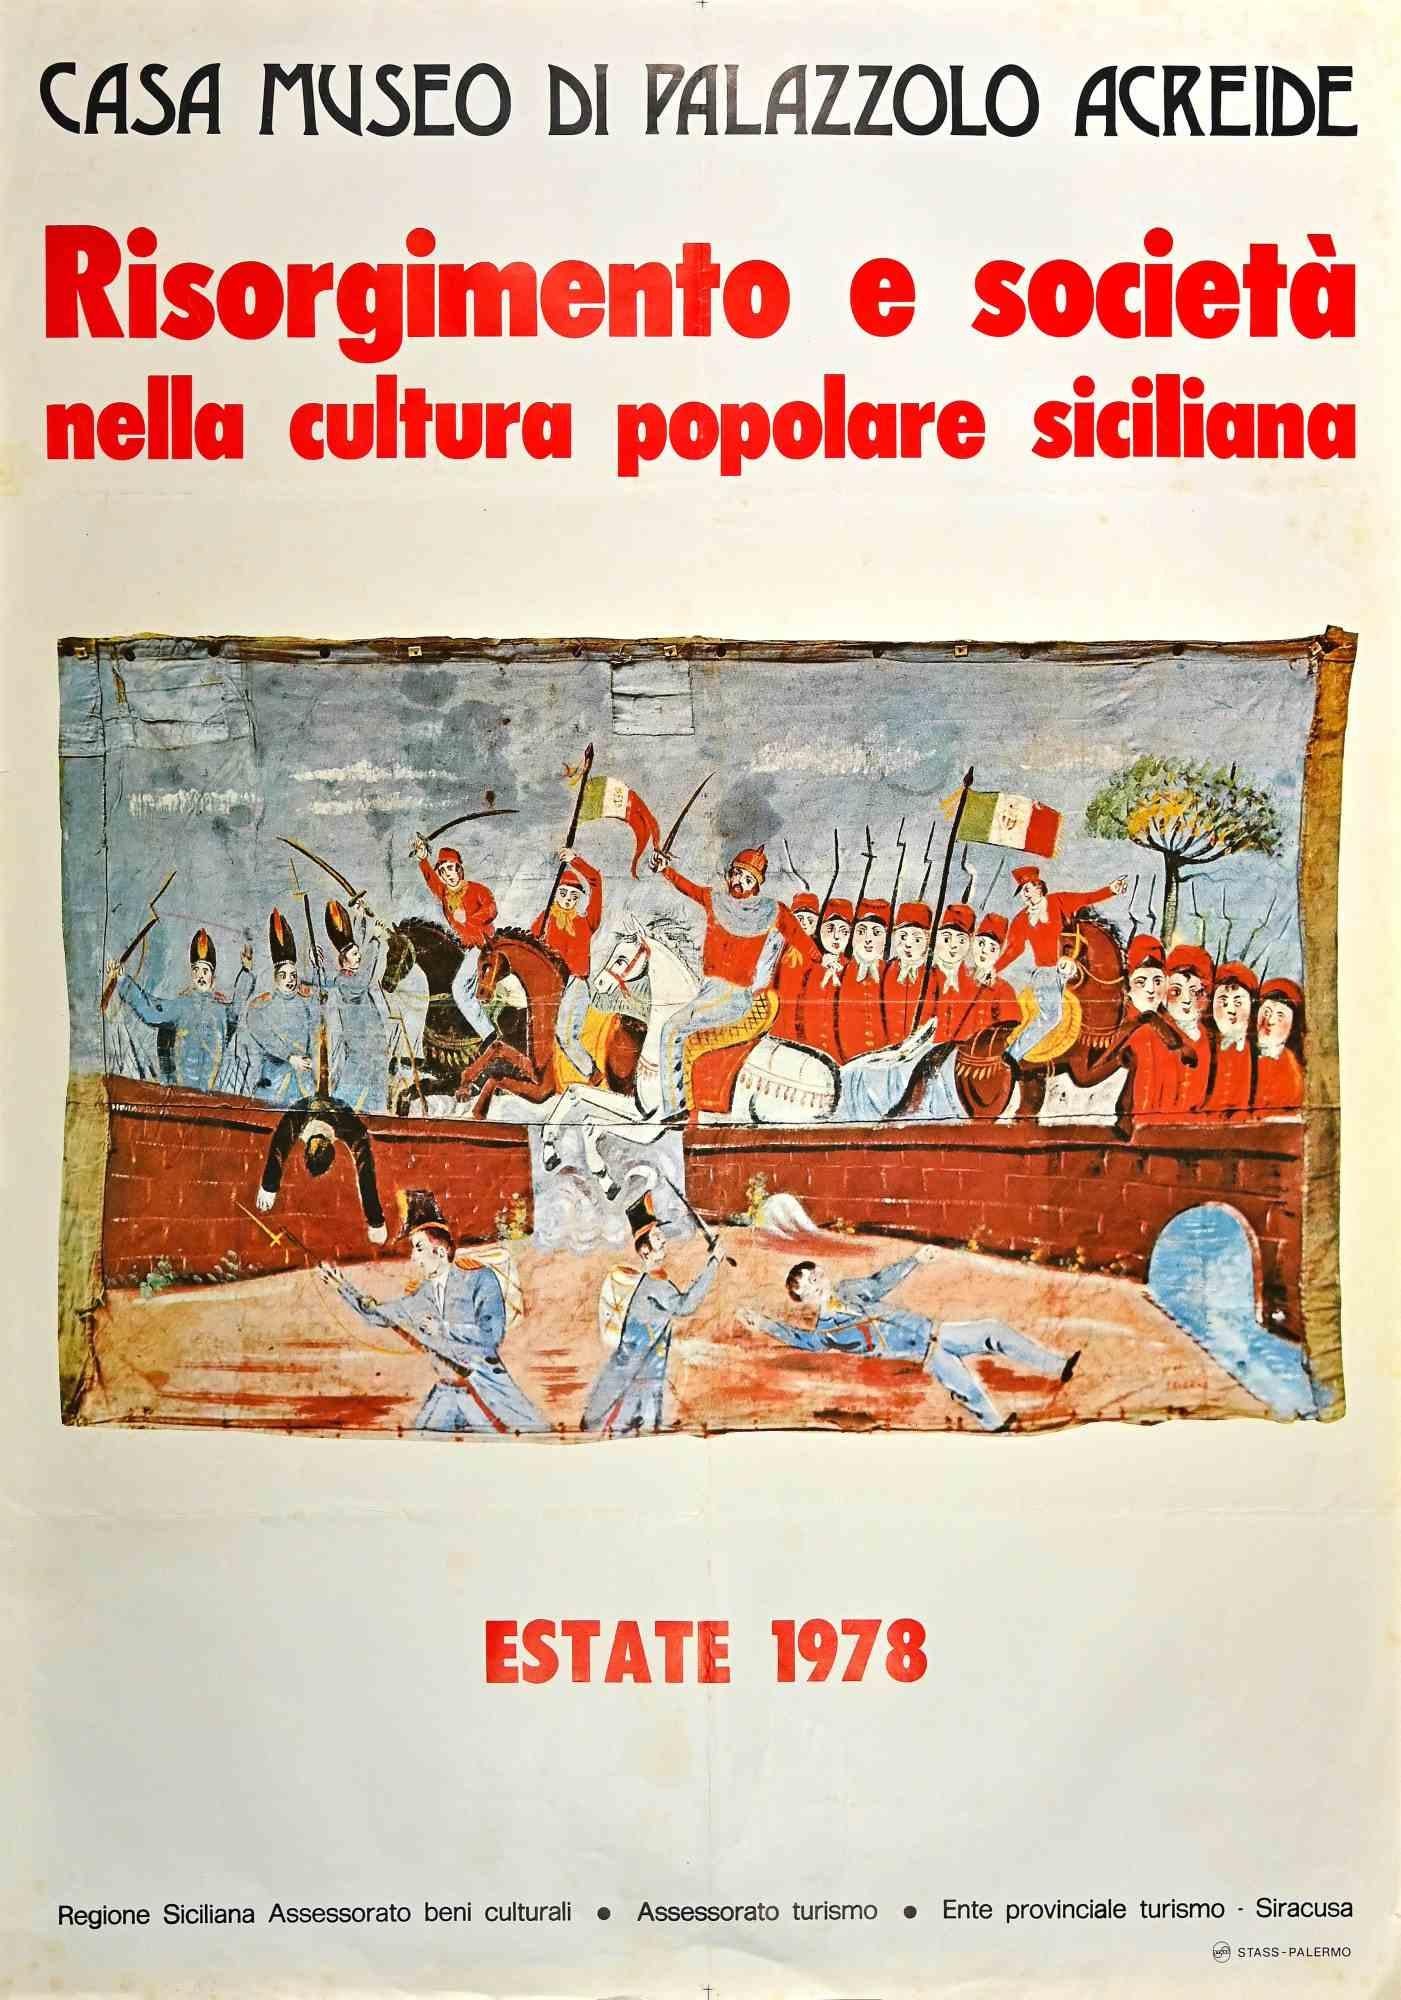 Risorgimento and Society - Offset Print - 1978